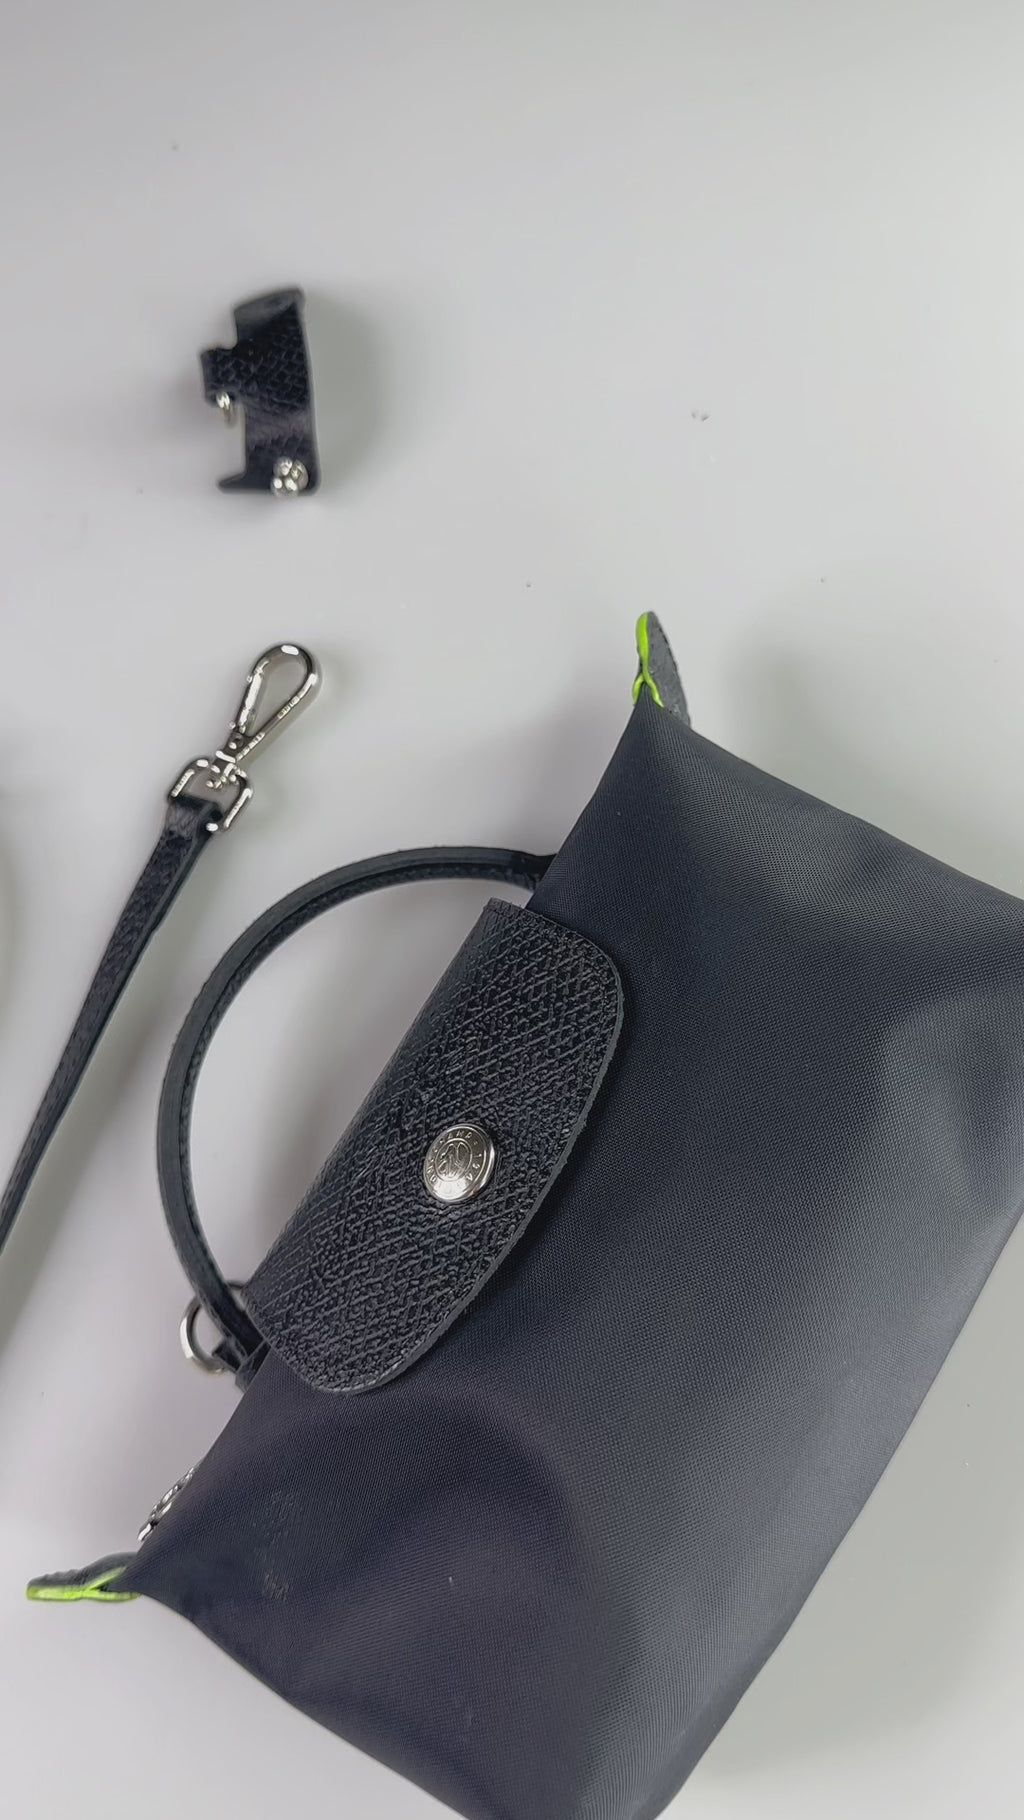 Crossbody Conversion Kit for Longchamp Le Pliage Pouch with Handle –  dressupyourpurse